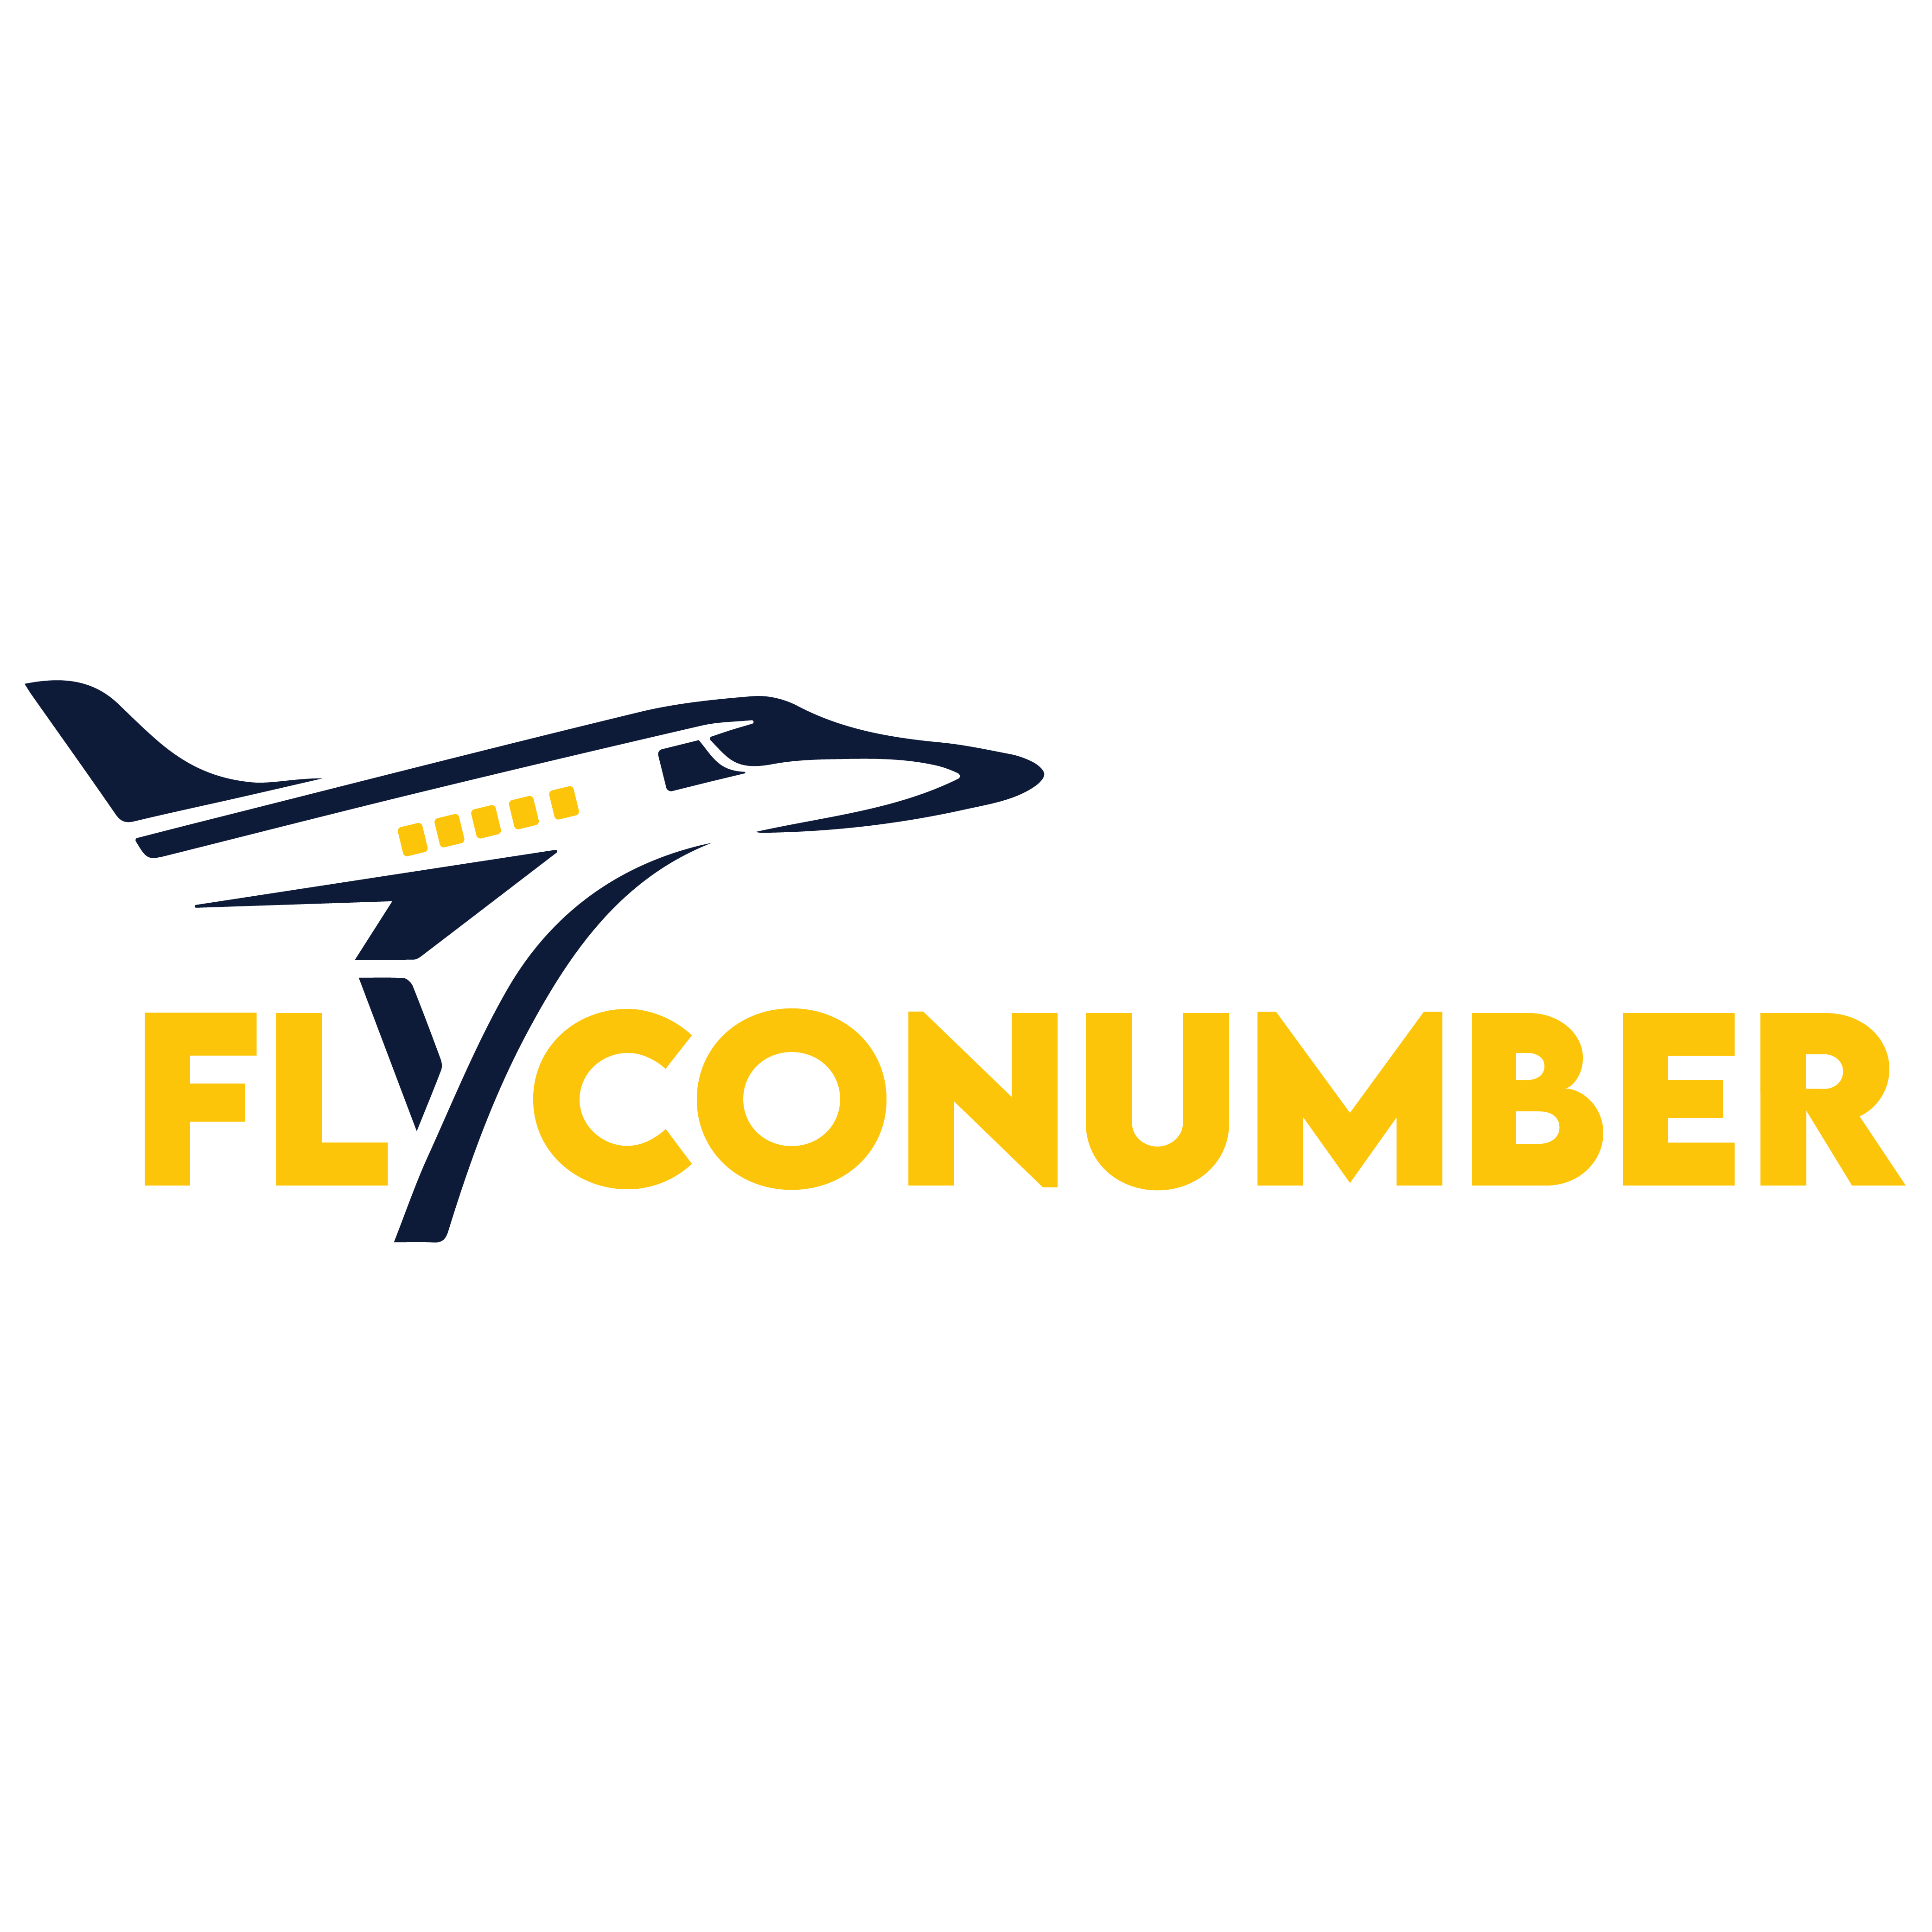 flyconumber PPT making software